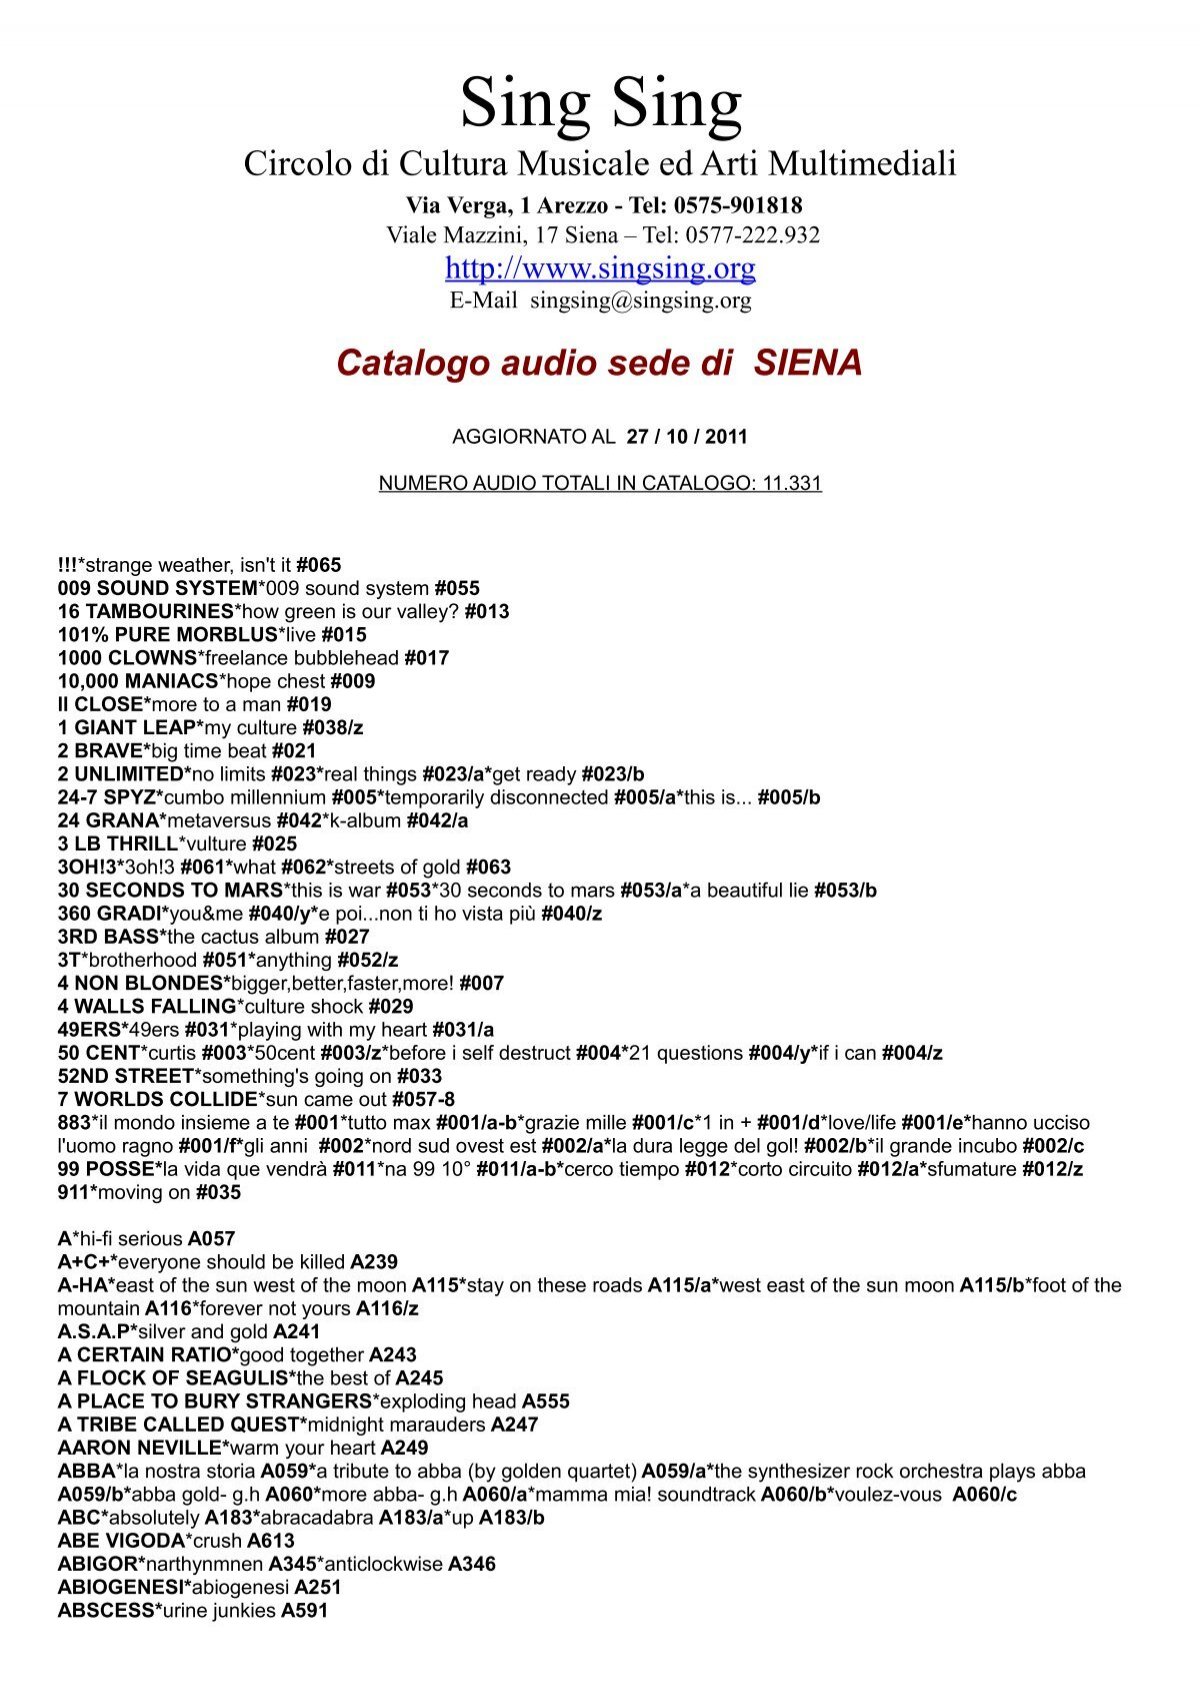 Catalogo audio sede di SIENA - Sing Sing